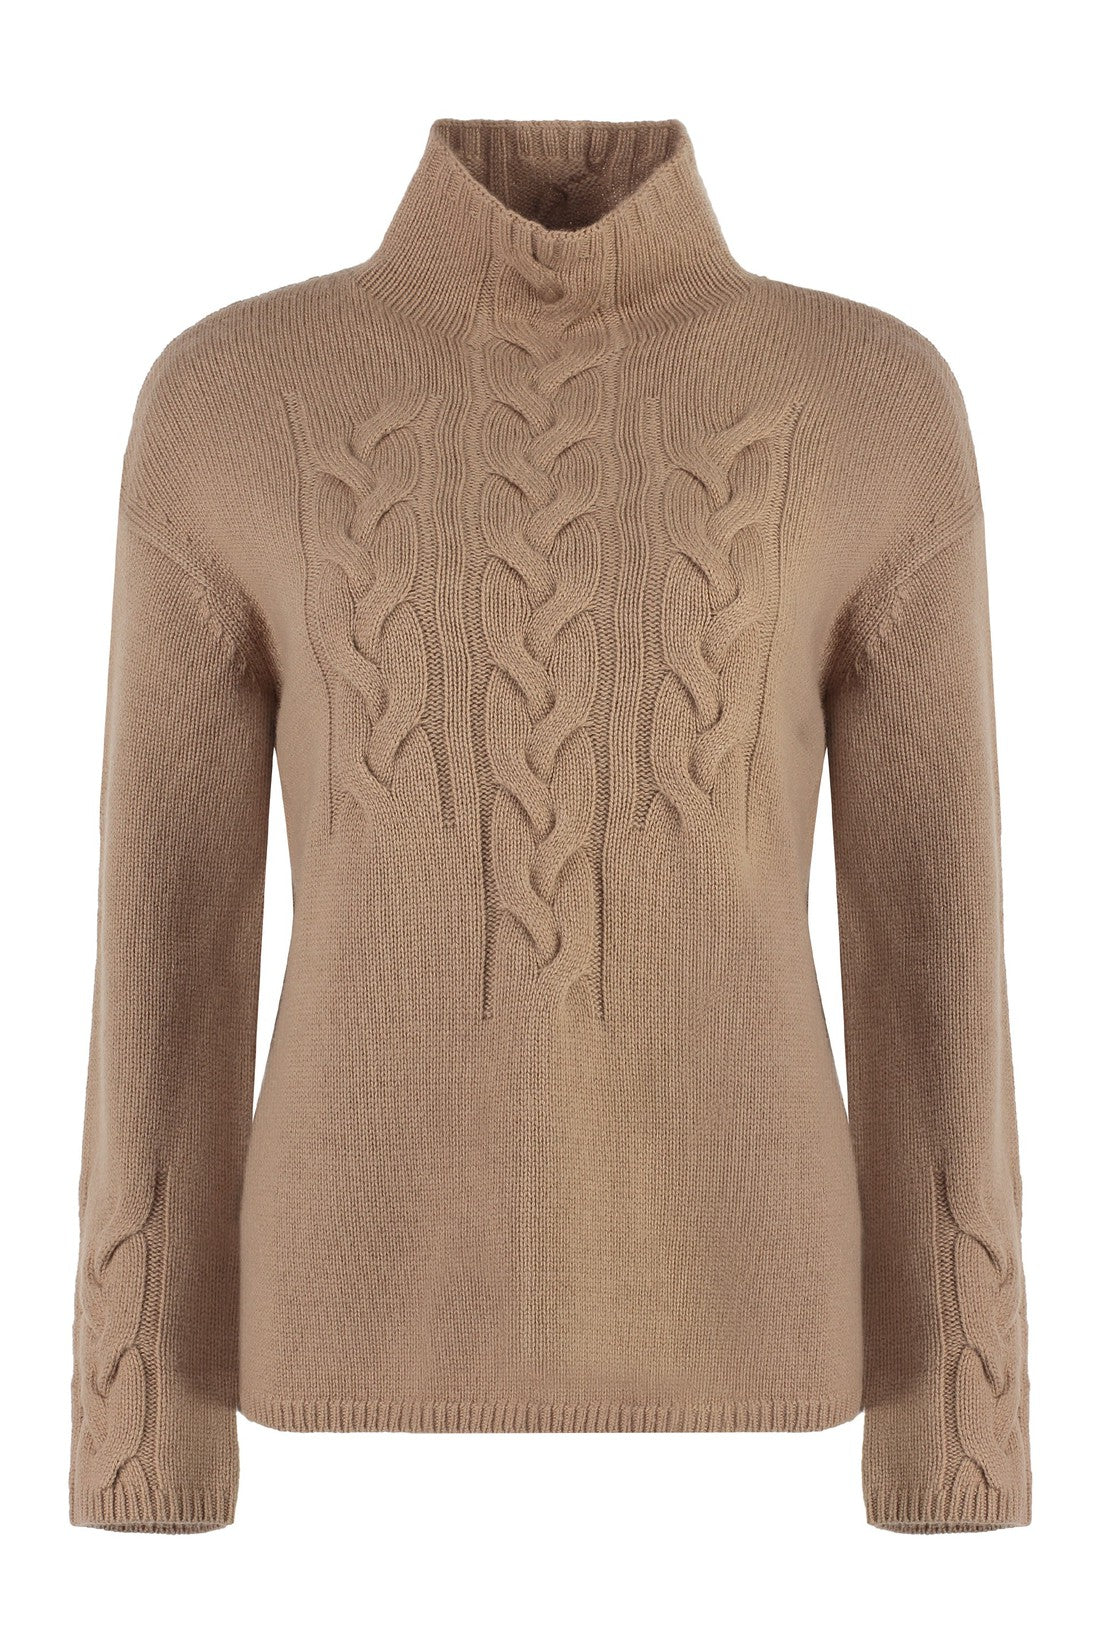 S MAX MARA-OUTLET-SALE-Wool blend turtleneck sweater-ARCHIVIST